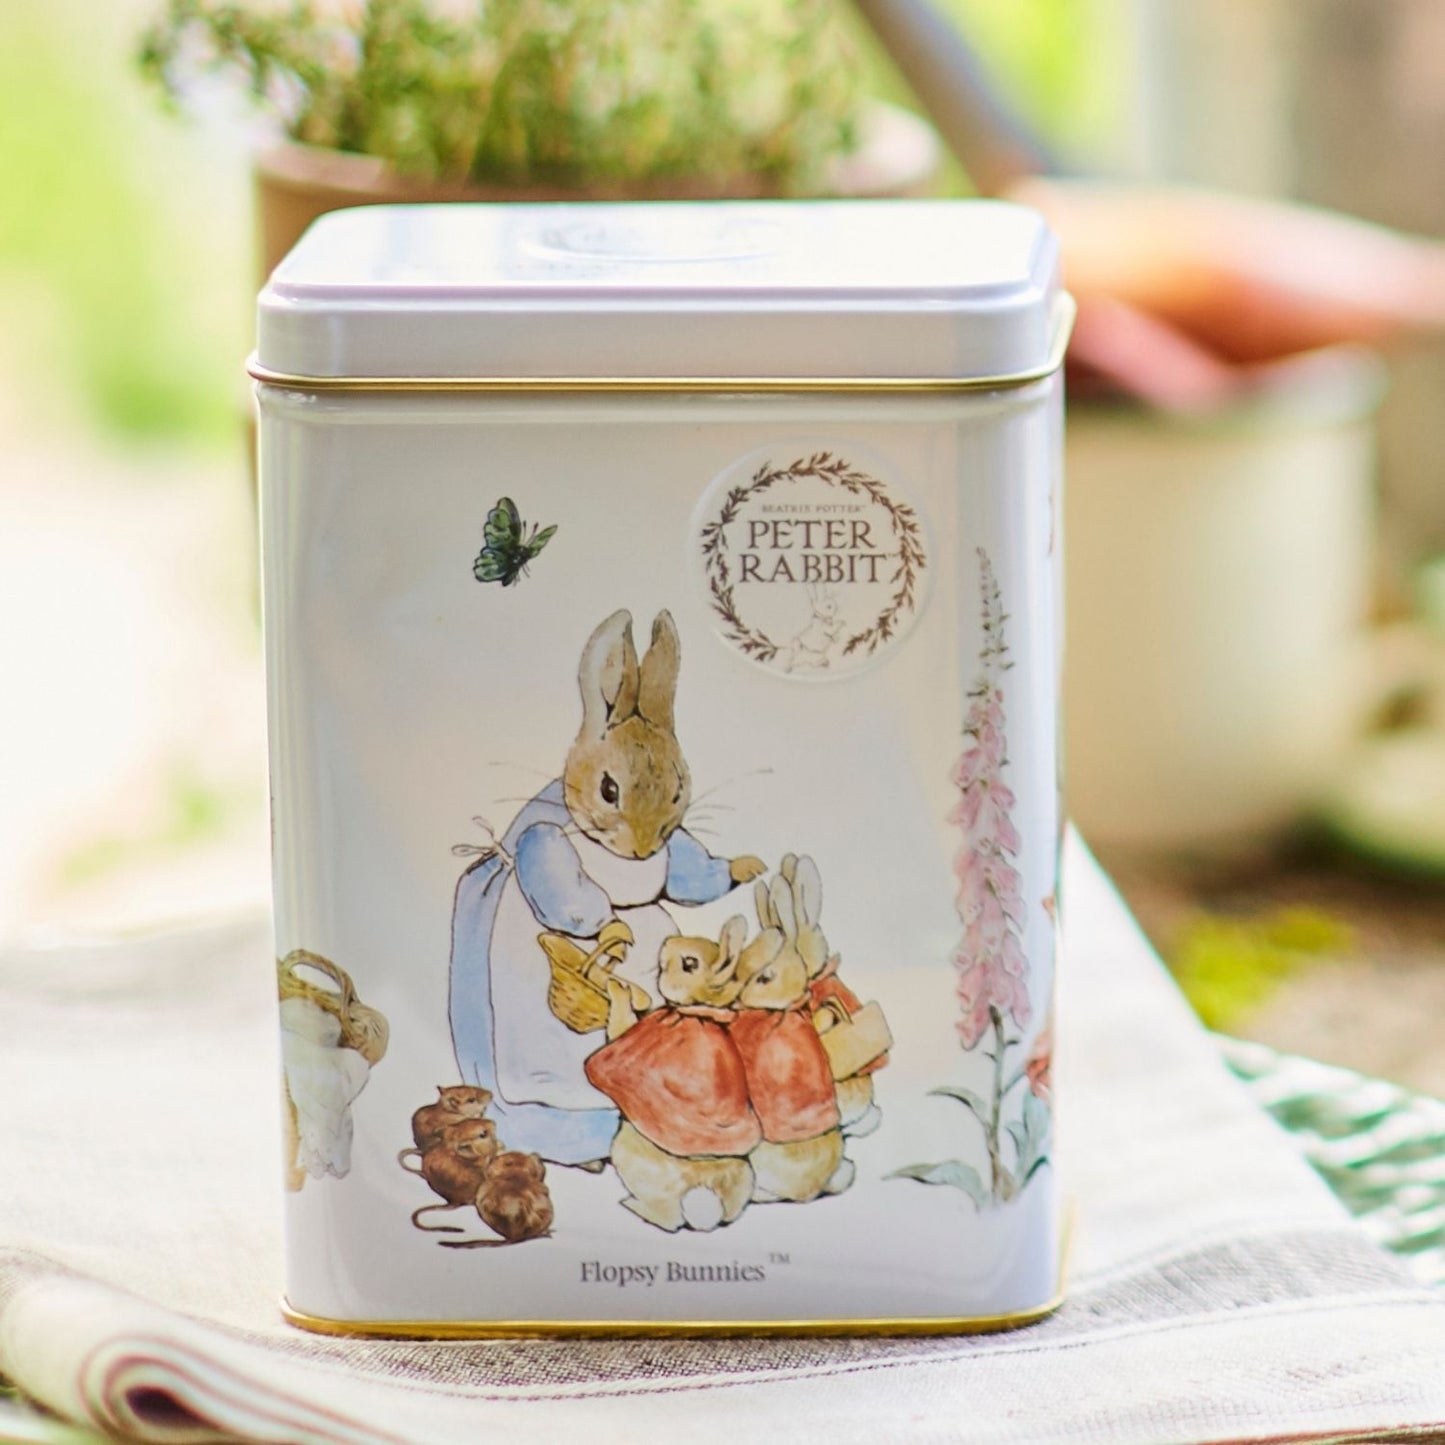 Beatrix Potter Tea Tin with 40 English Afternoon teabags Black Tea New English Teas 